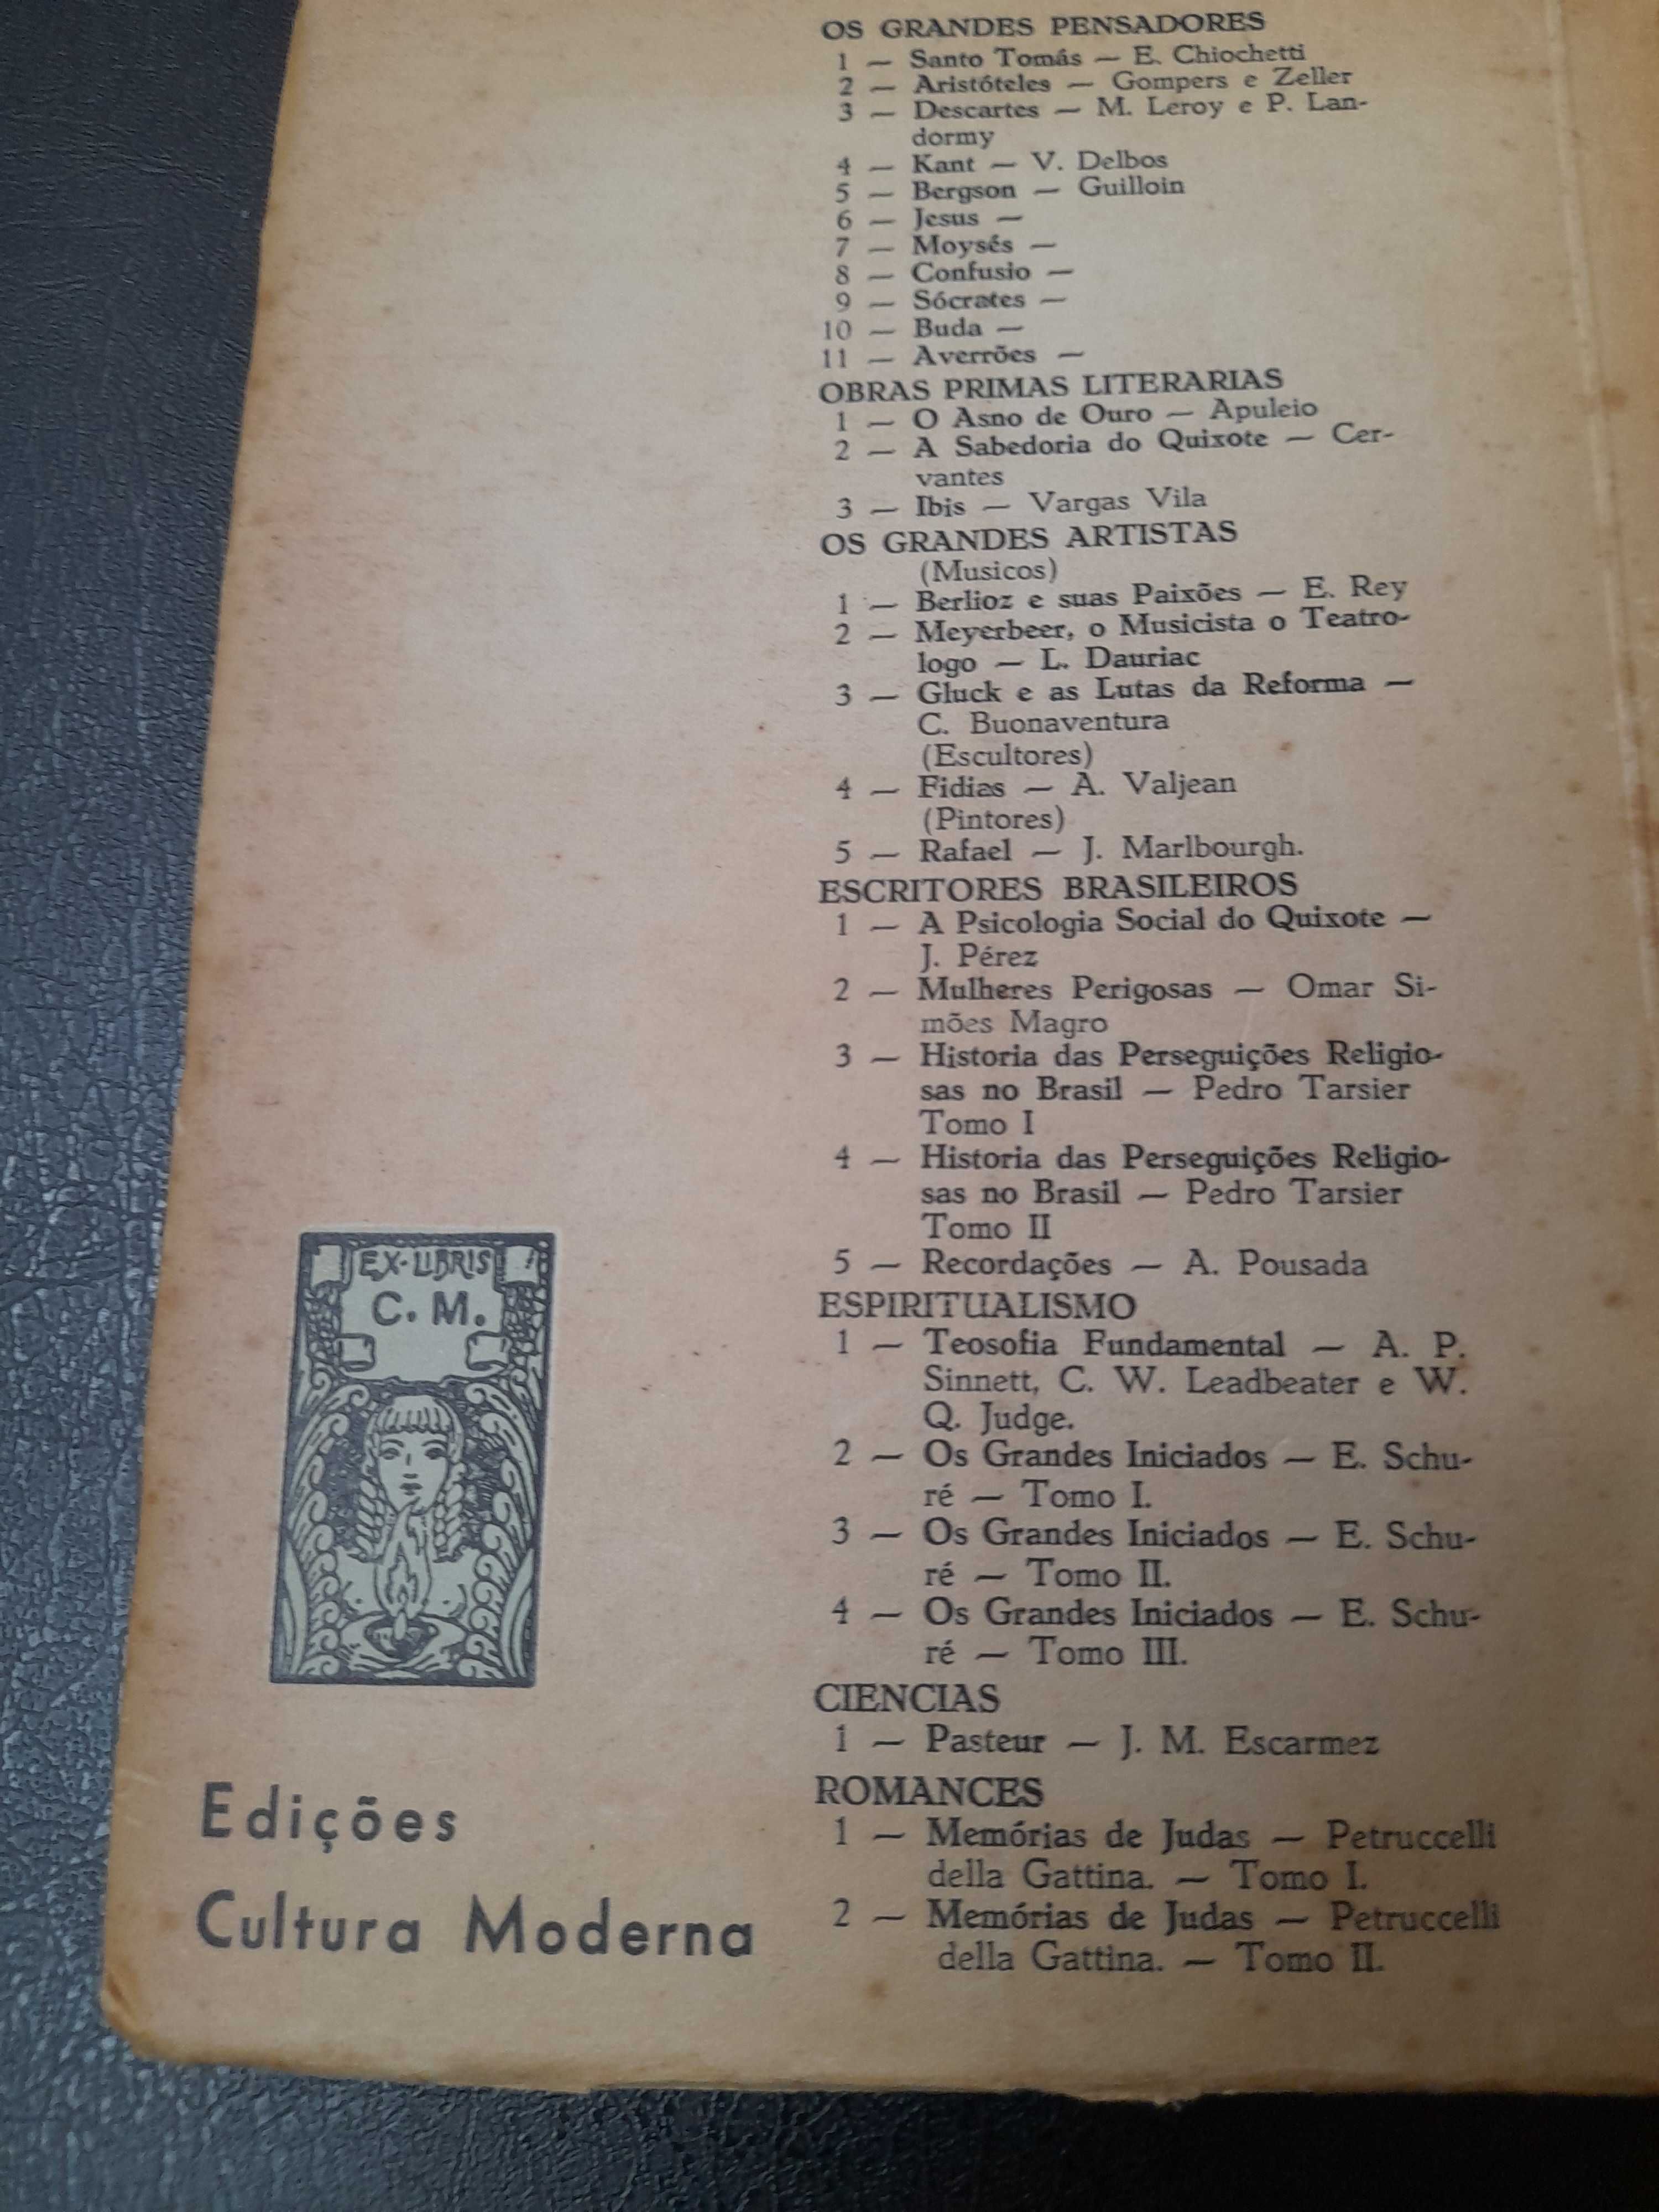 Brochura 1936 Antoine Valjean" Fidias"